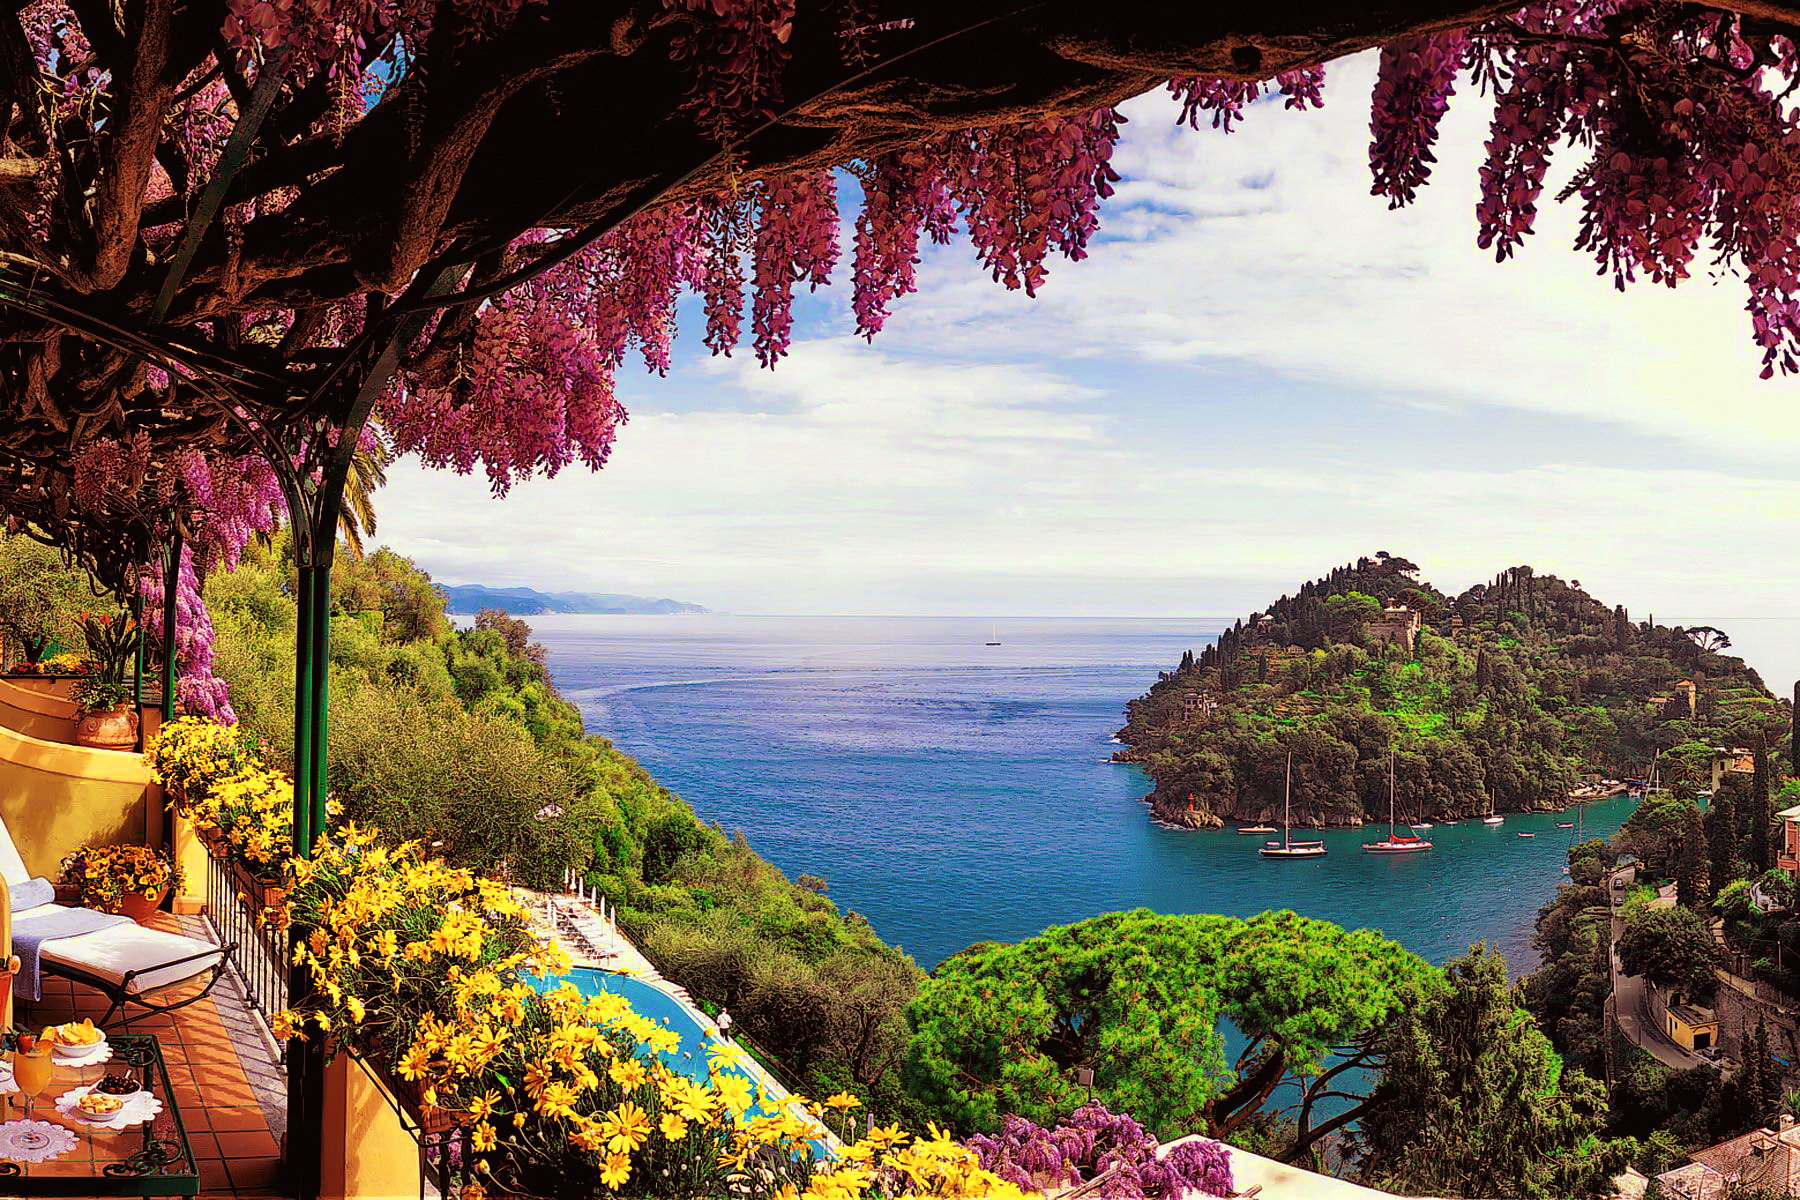 italy, horizon, sea, man made, amalfi, boat, flower, island, ocean, terrace, towns